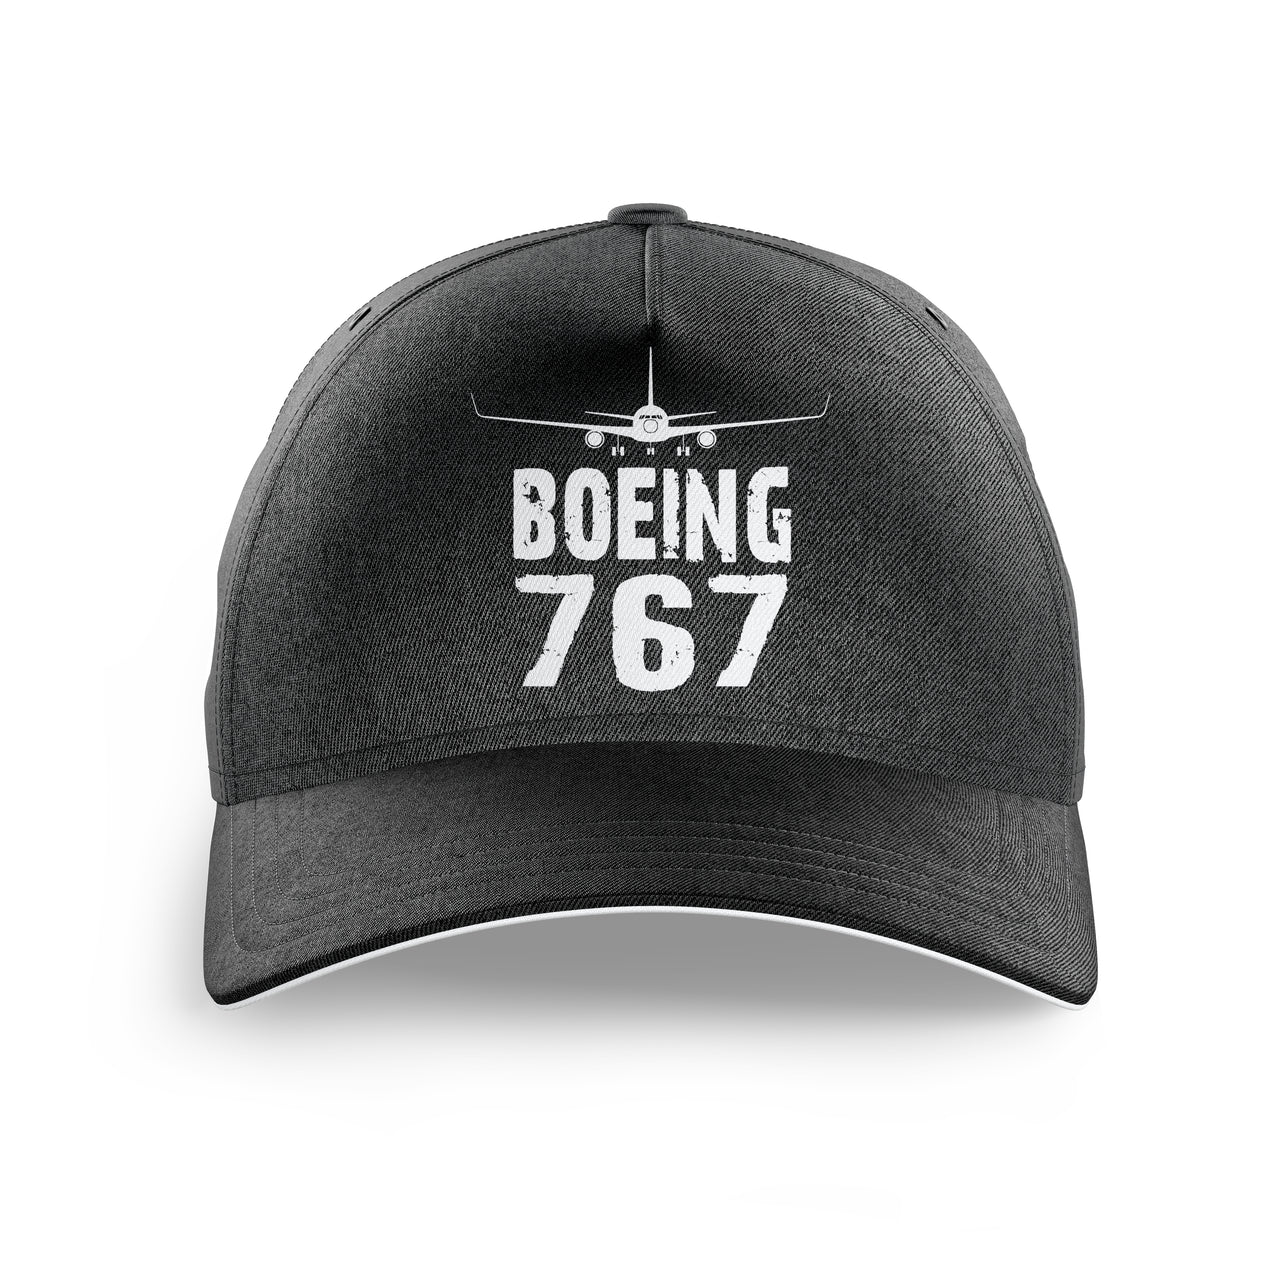 Boeing 767 & Plane Printed Hats